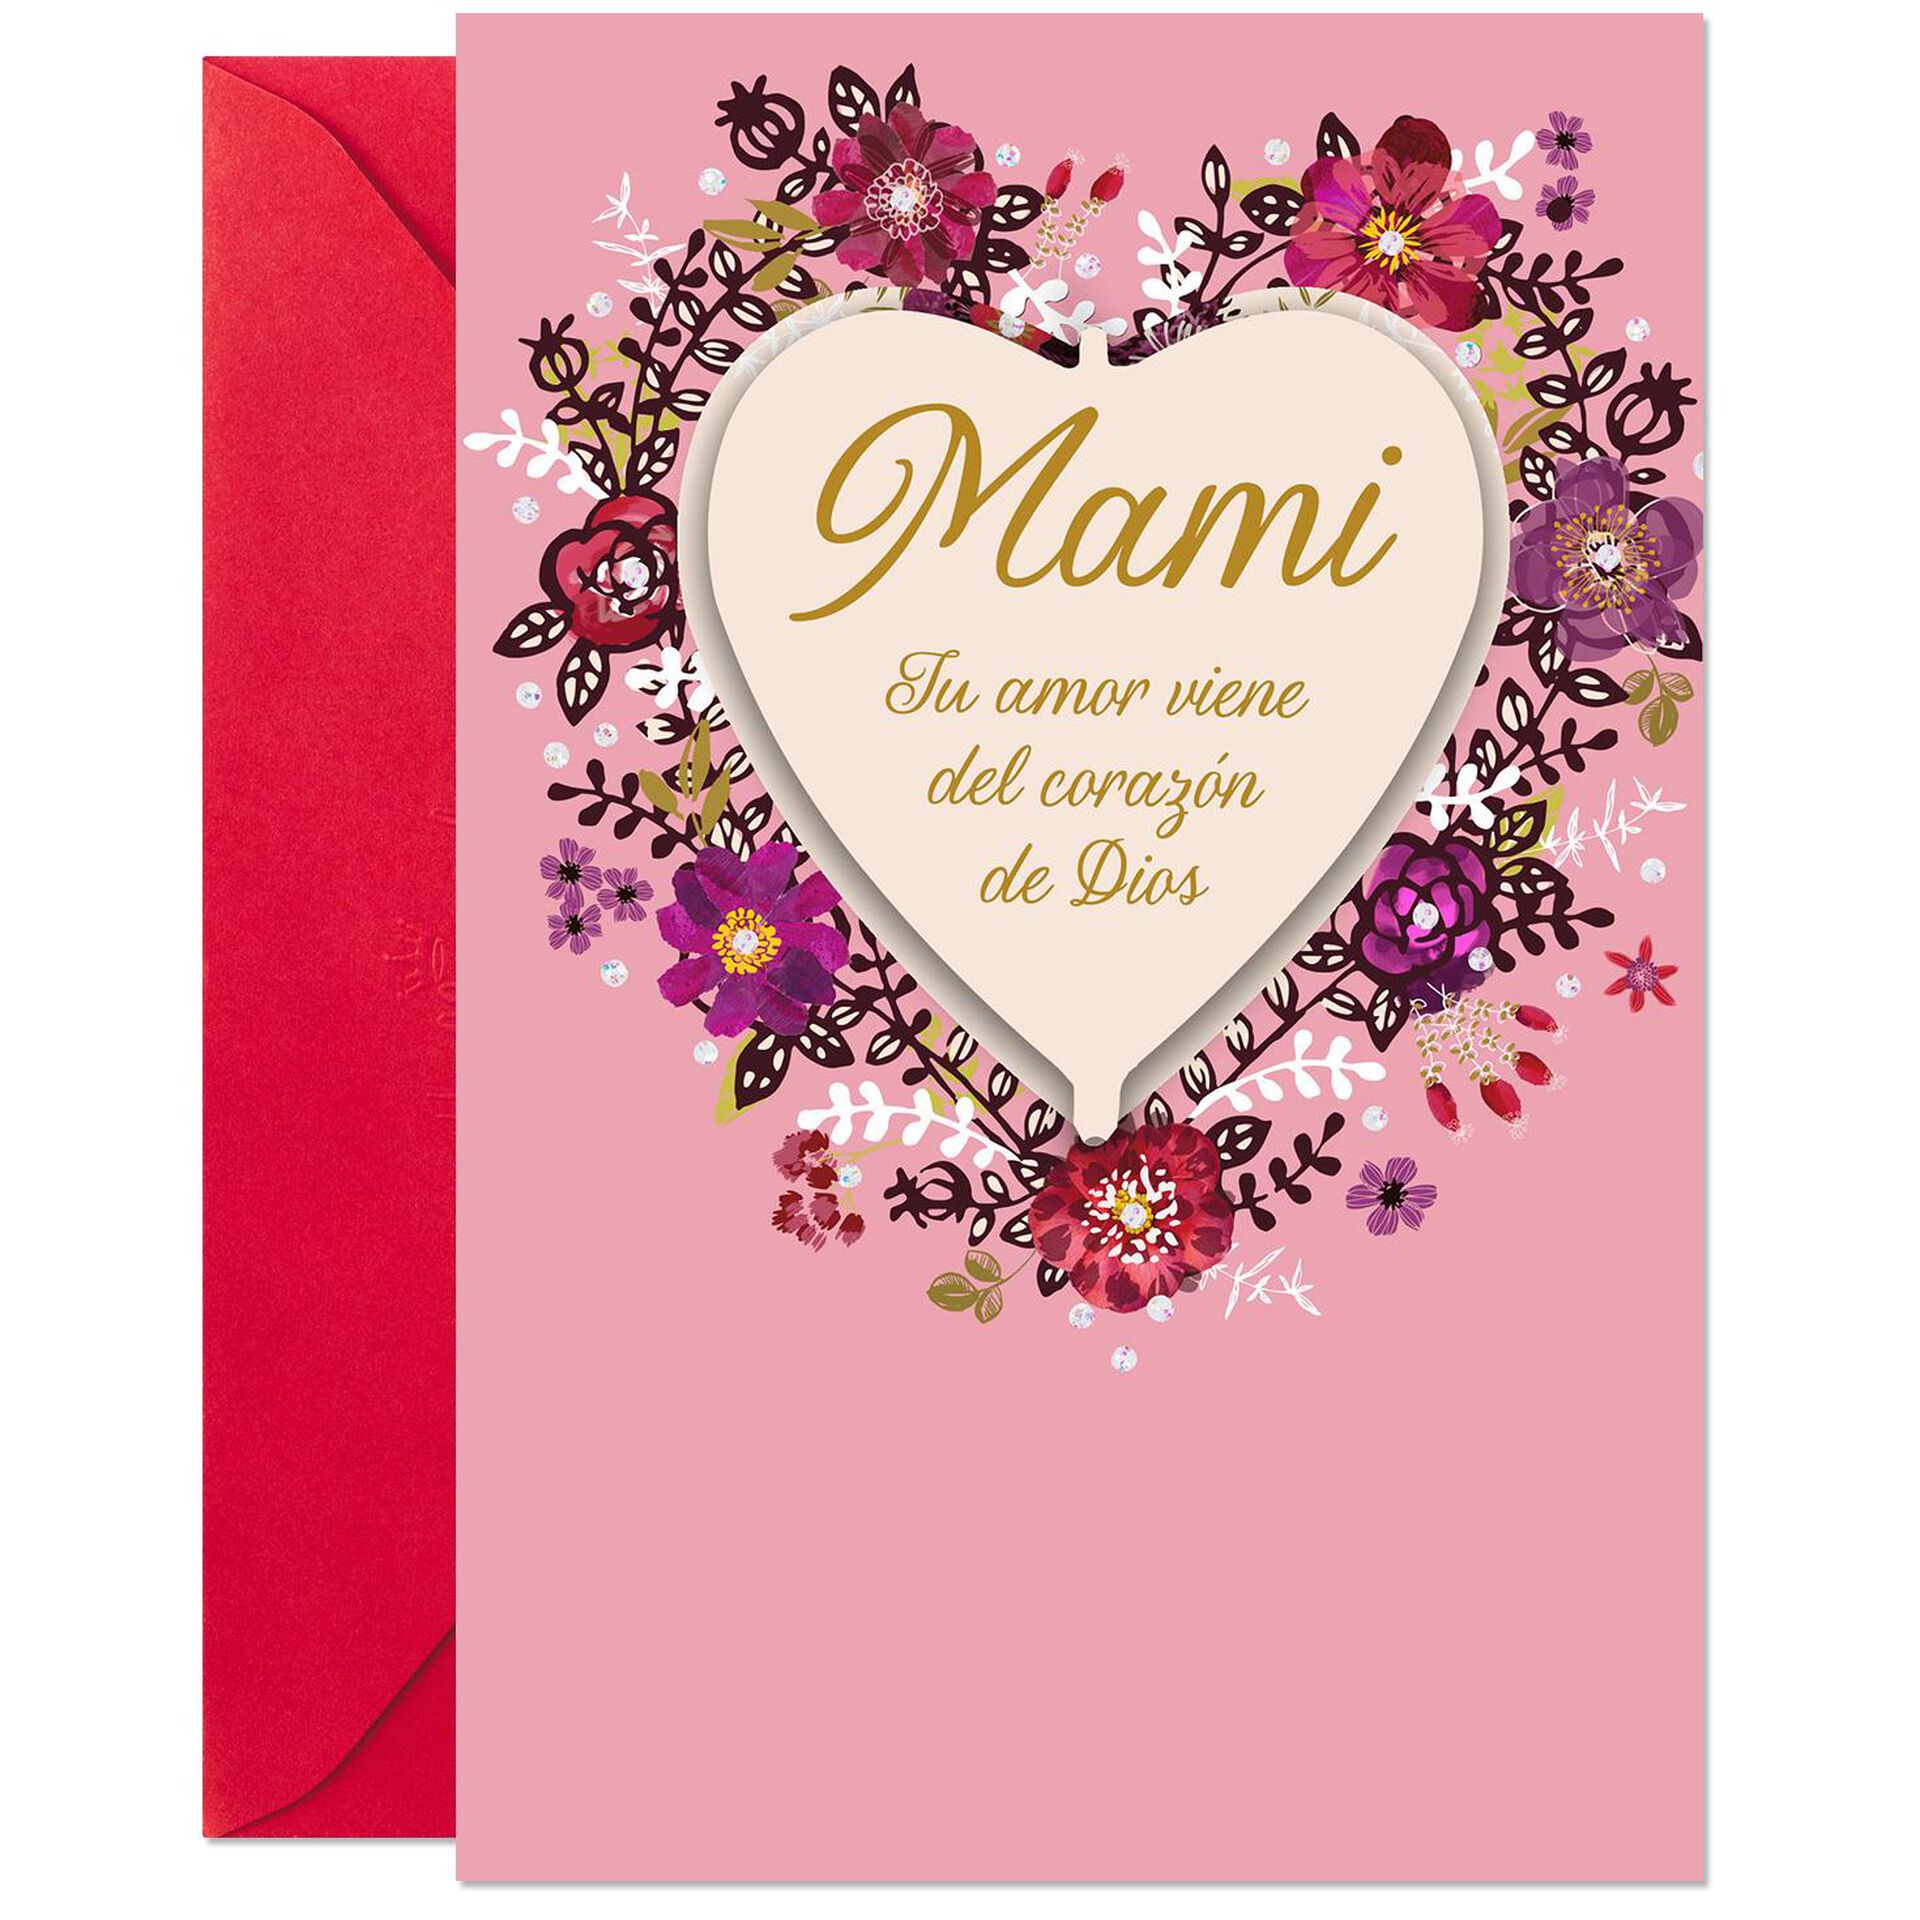 Thank You Spanish Language Valentine S Day Card For Mom Greeting Cards Hallmark